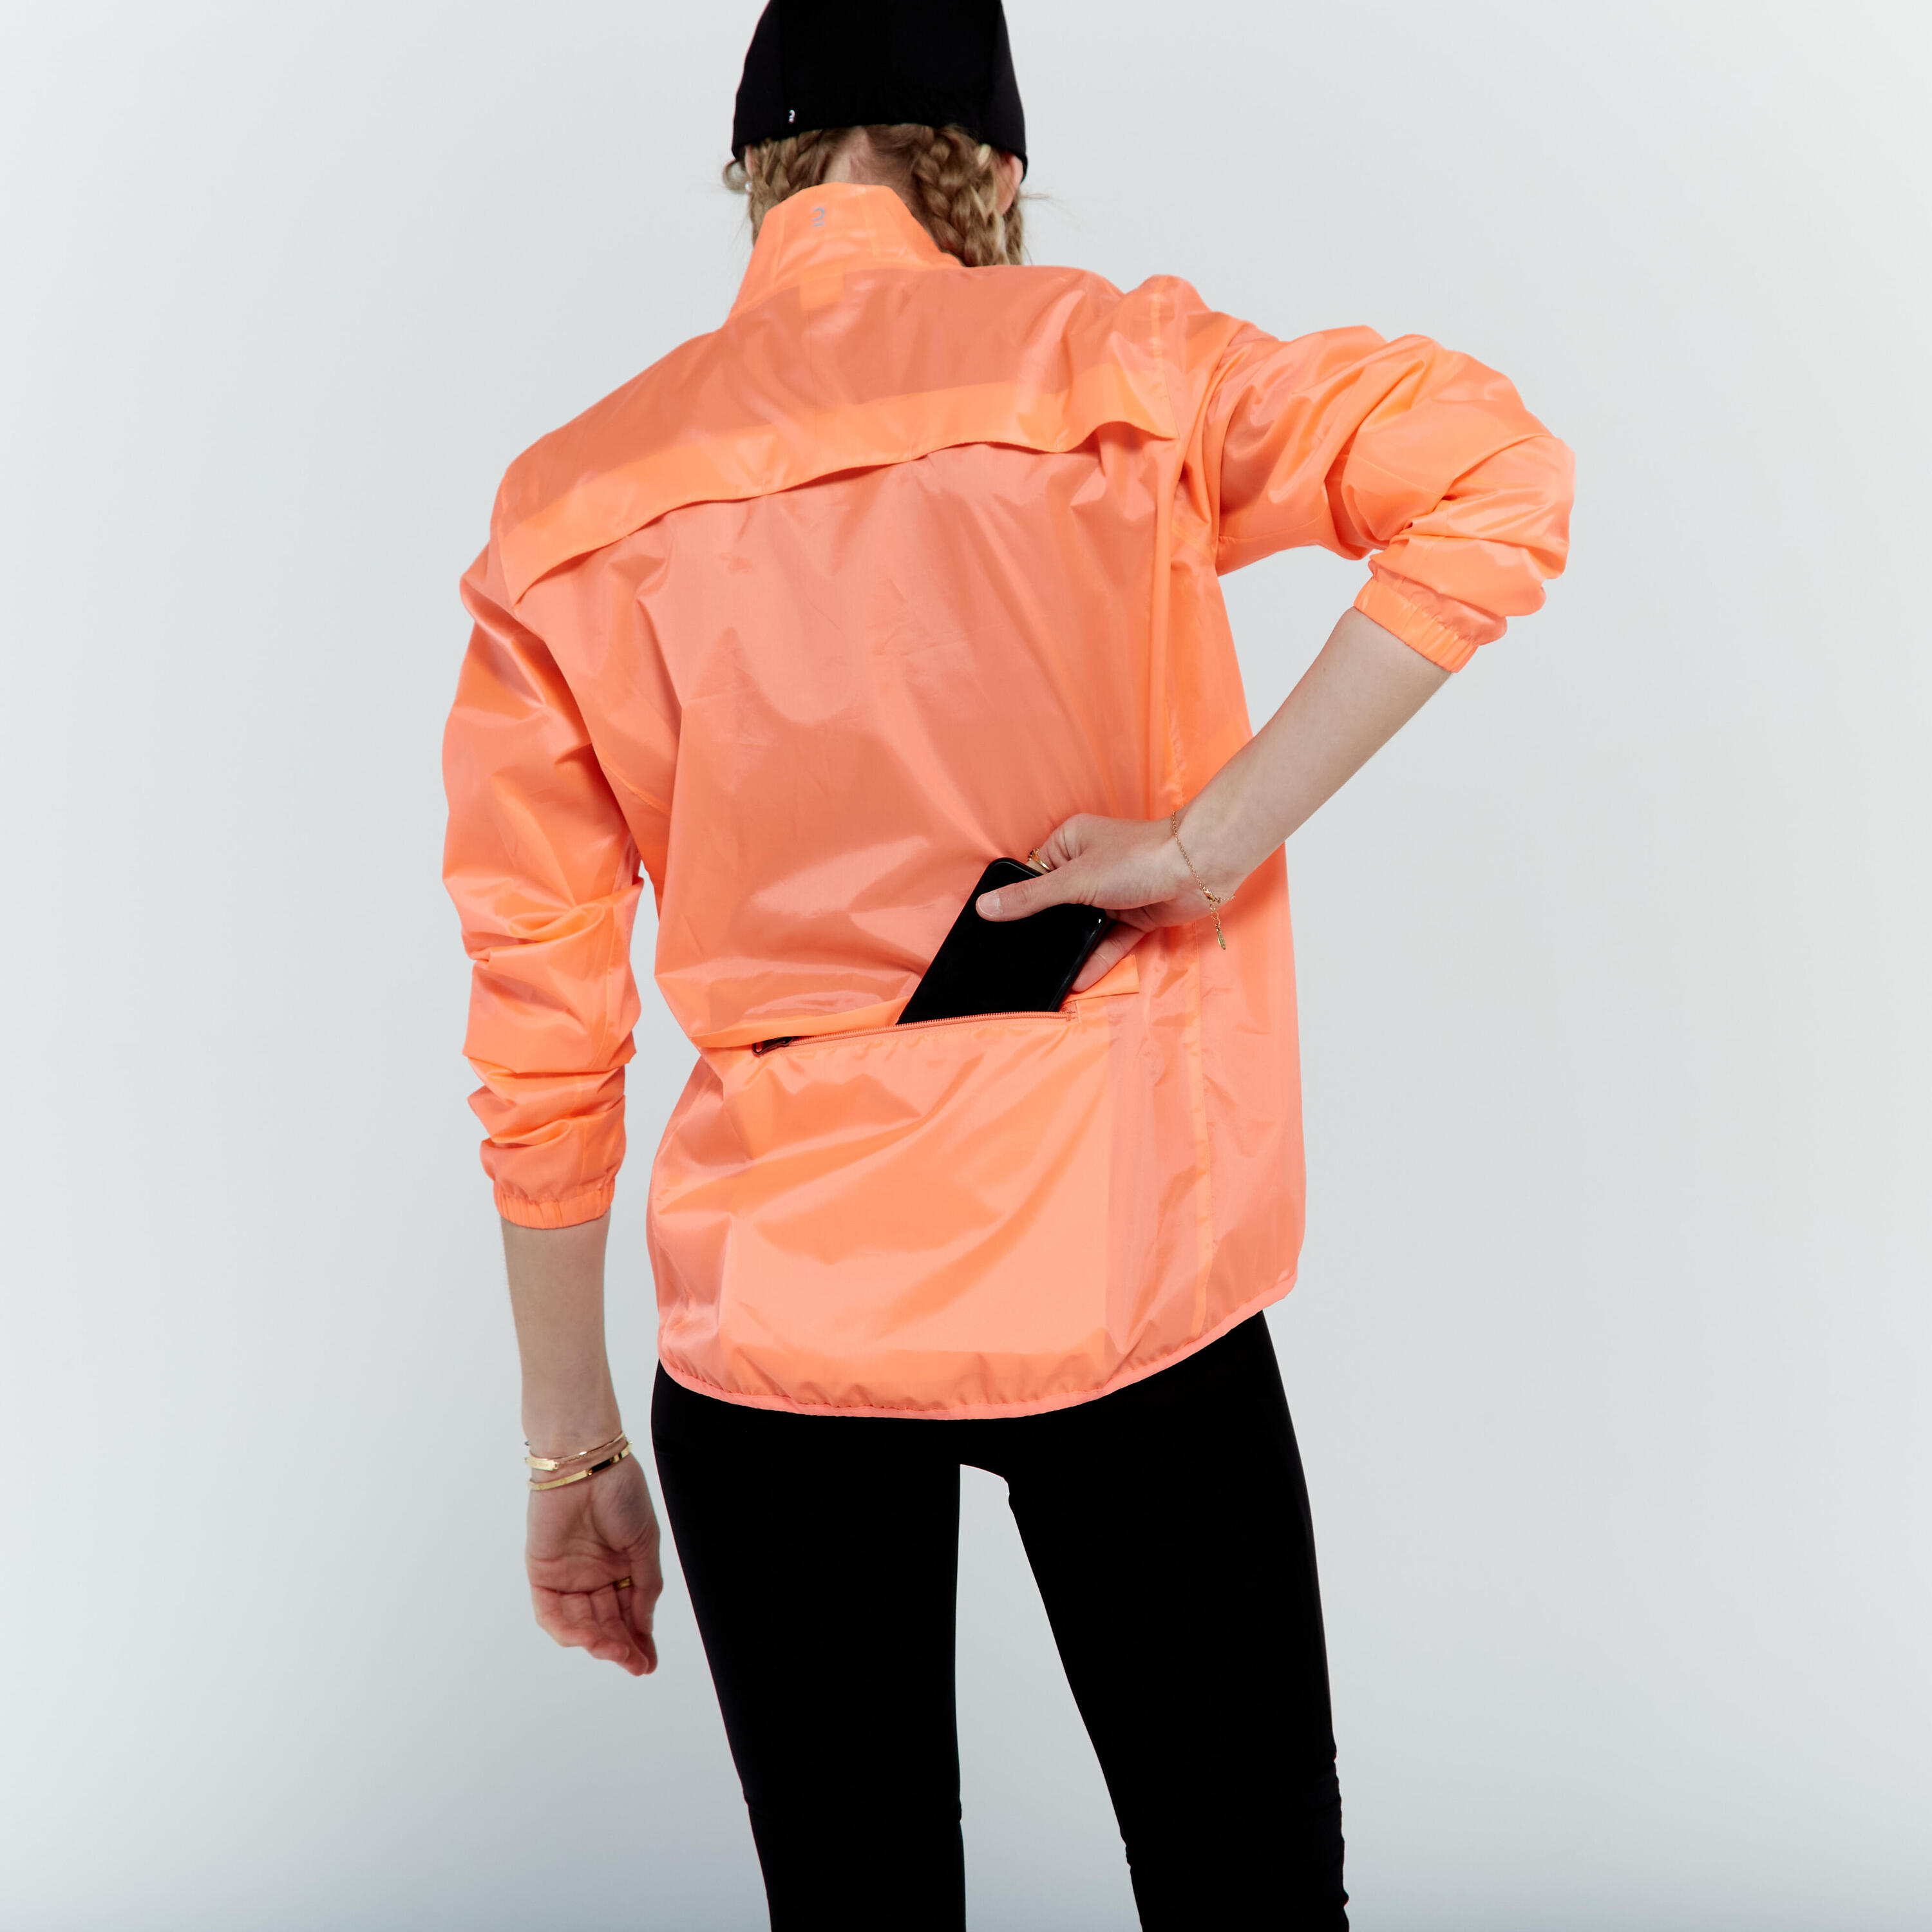 Women's Cycling Rainproof Jacket 100 - Coral 5/5